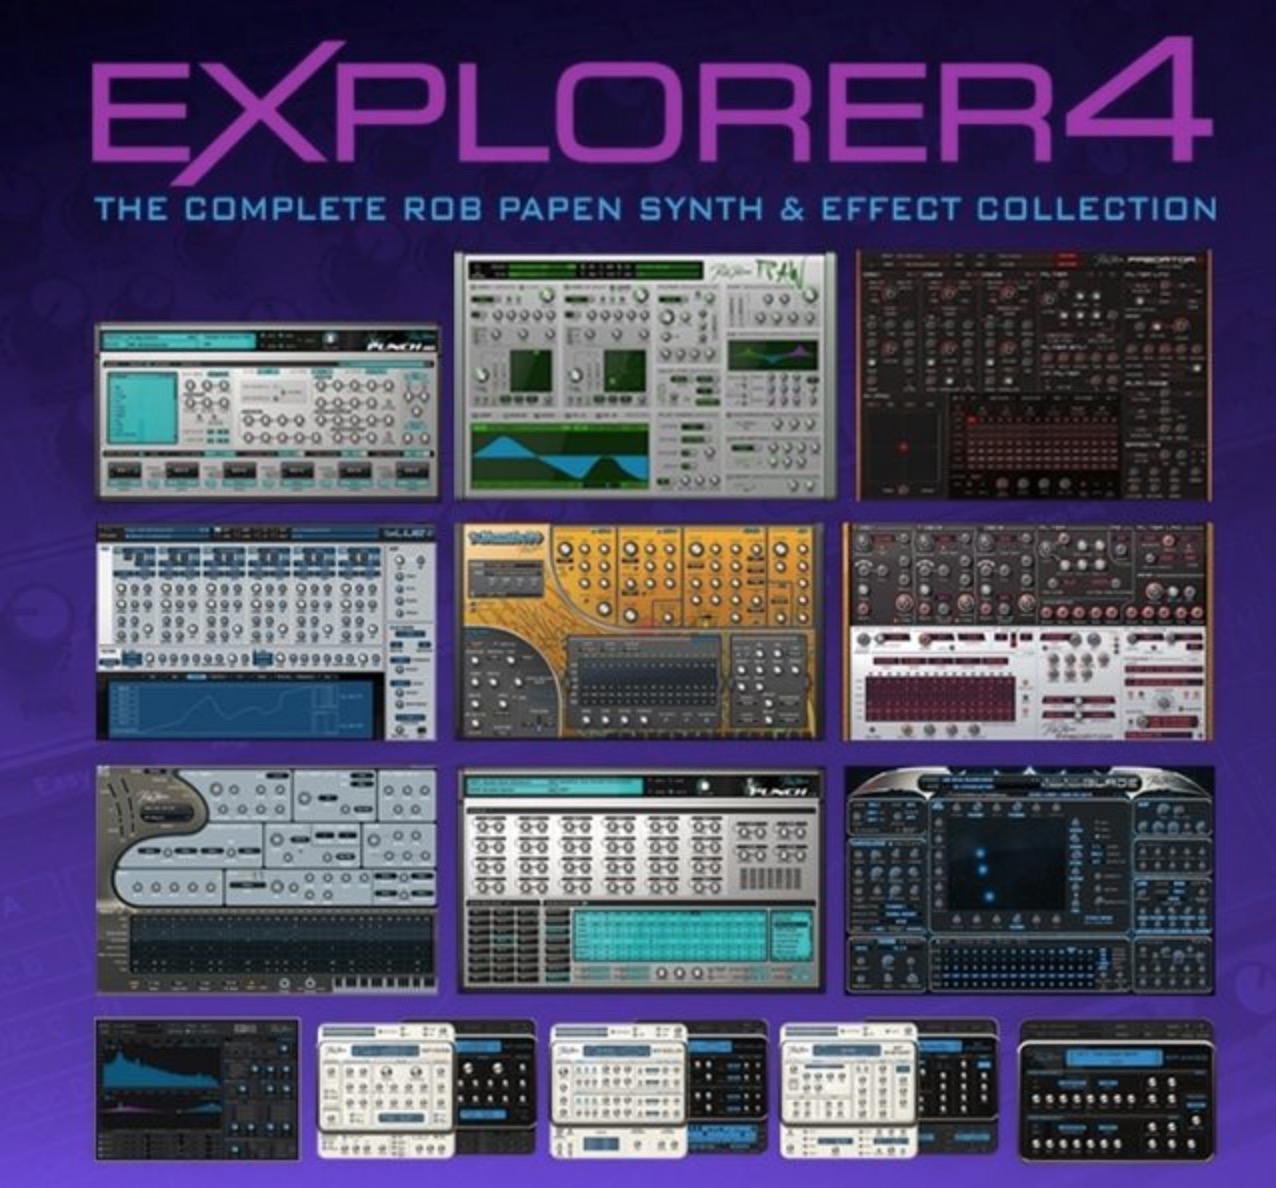 eXplorer4 bundle by Rob Papen Featured